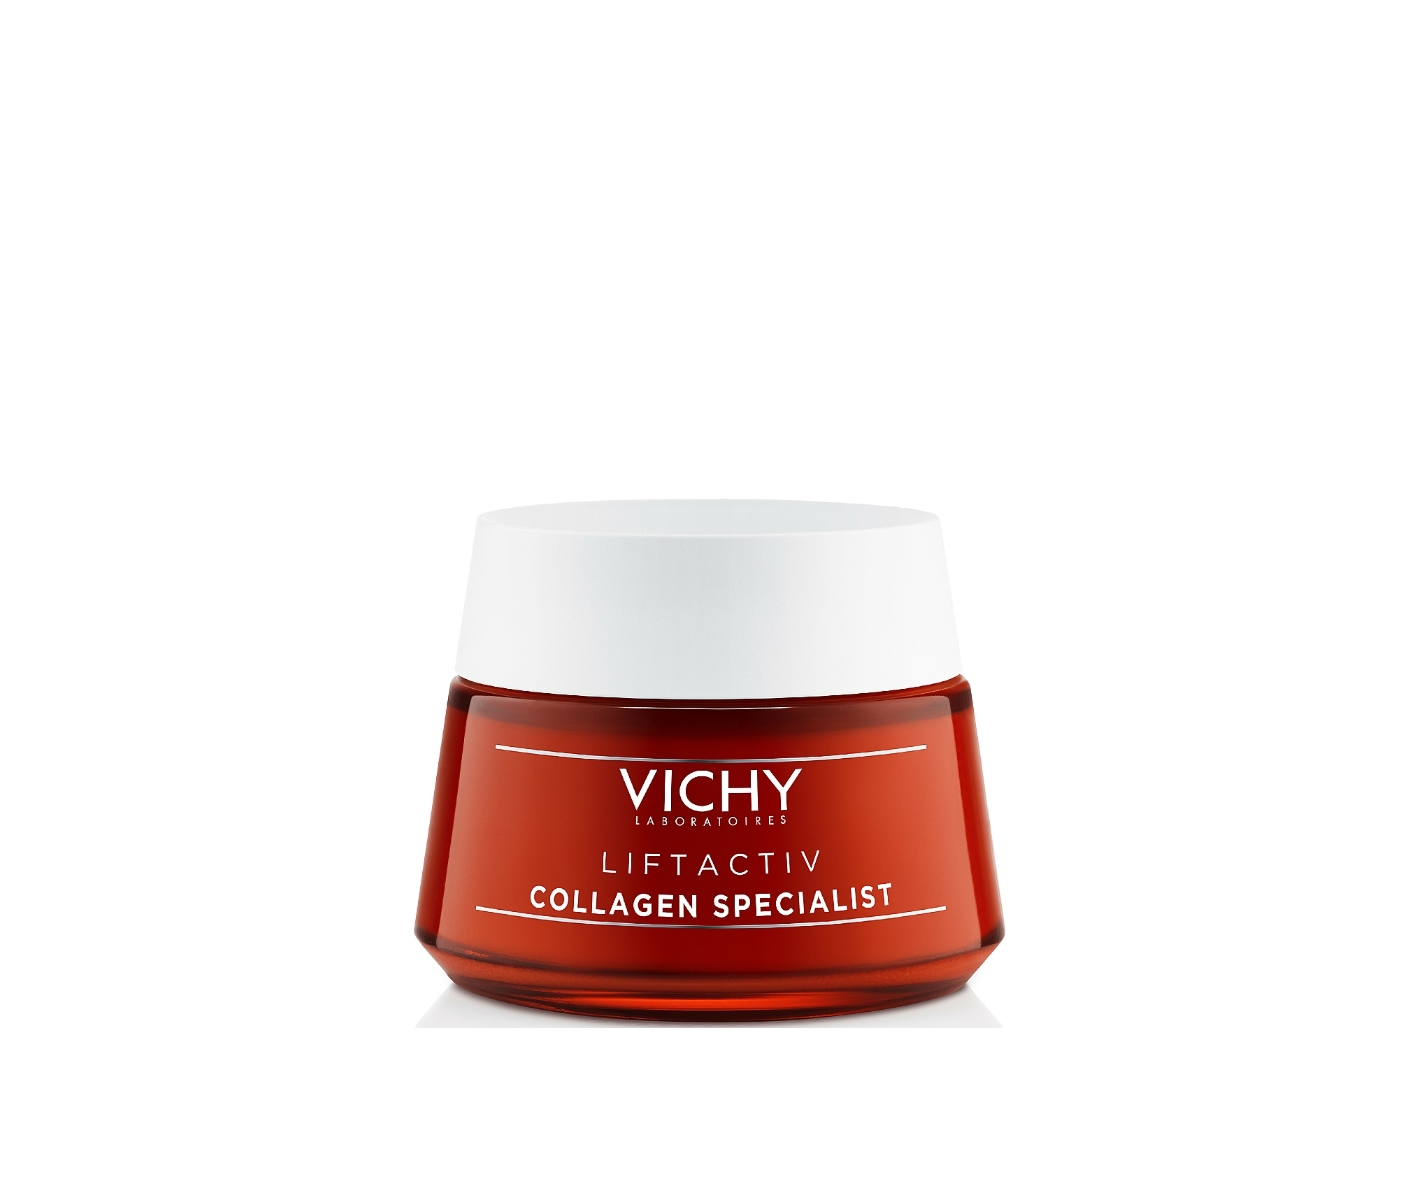 Vichy, Liftactiv Collagen Specialist